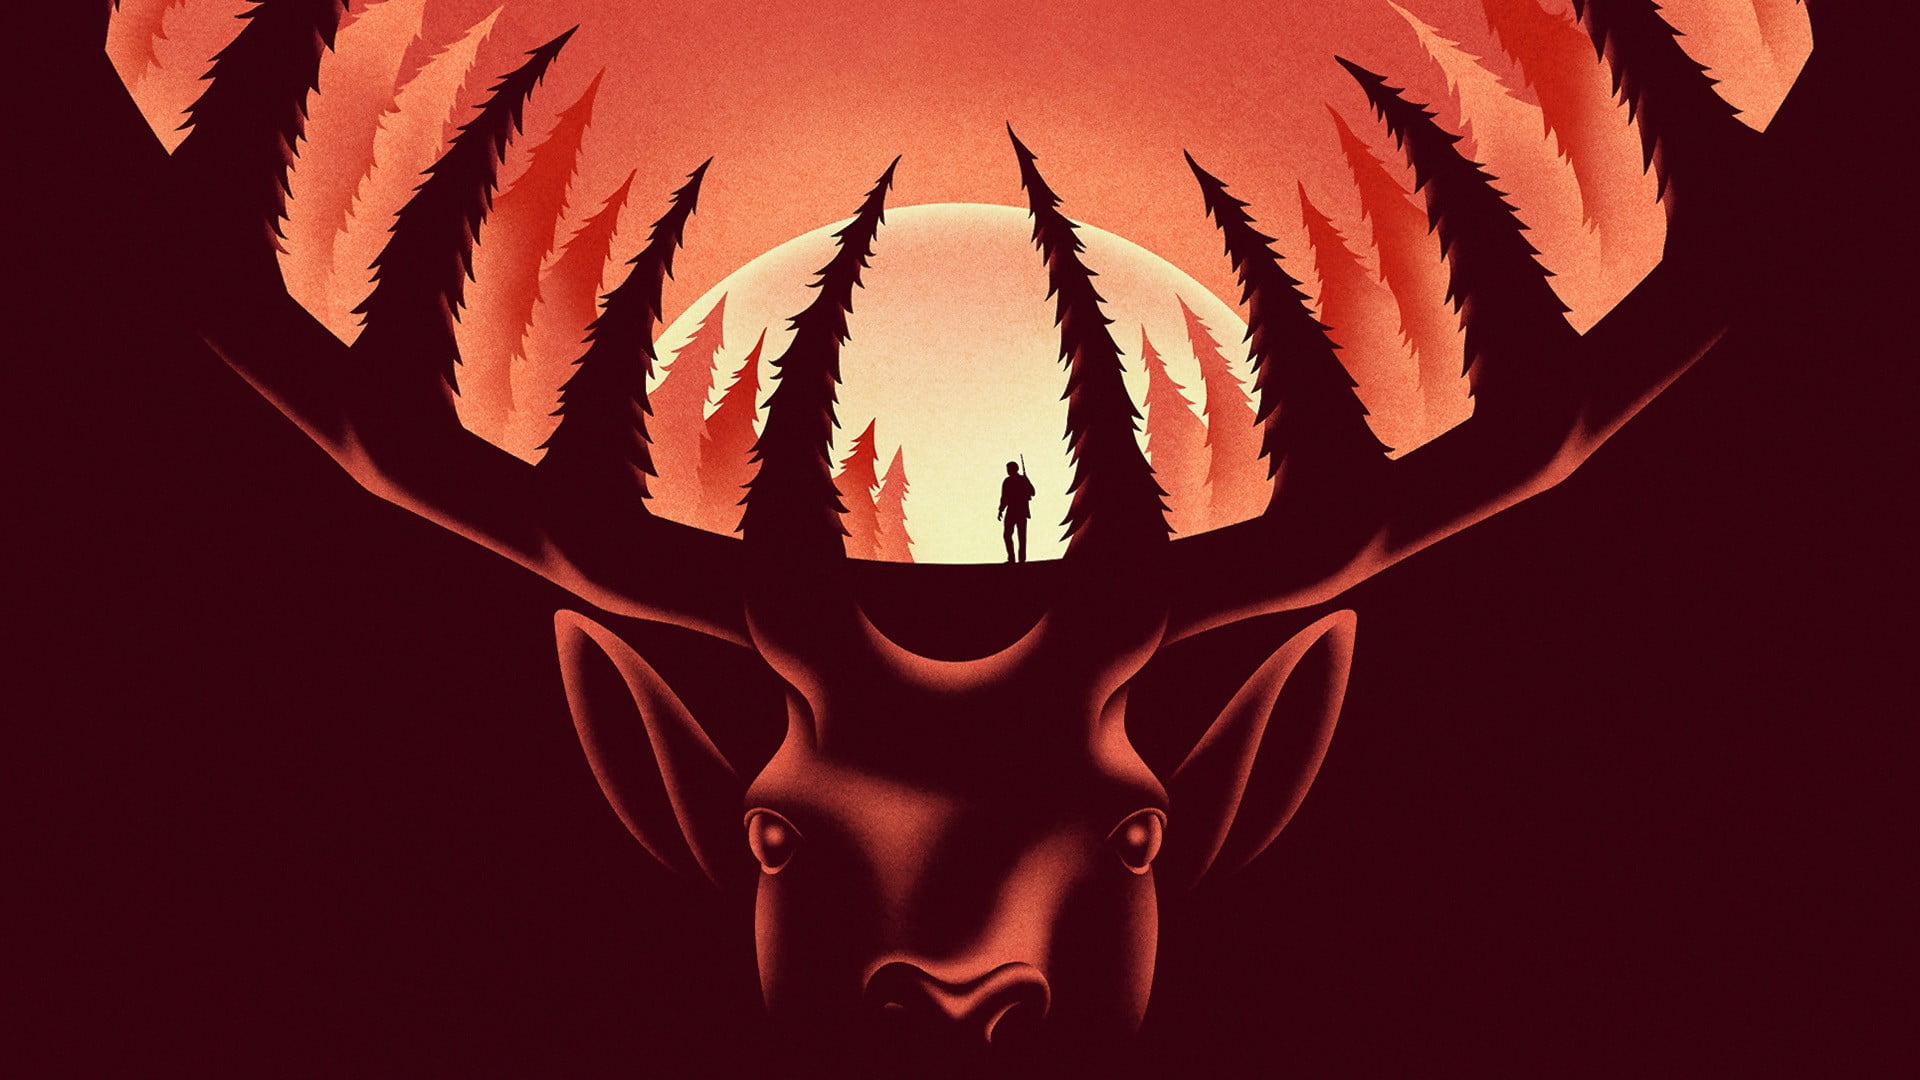 silhouette of man on deer antler poster, nature, animals, The Deer Hunter